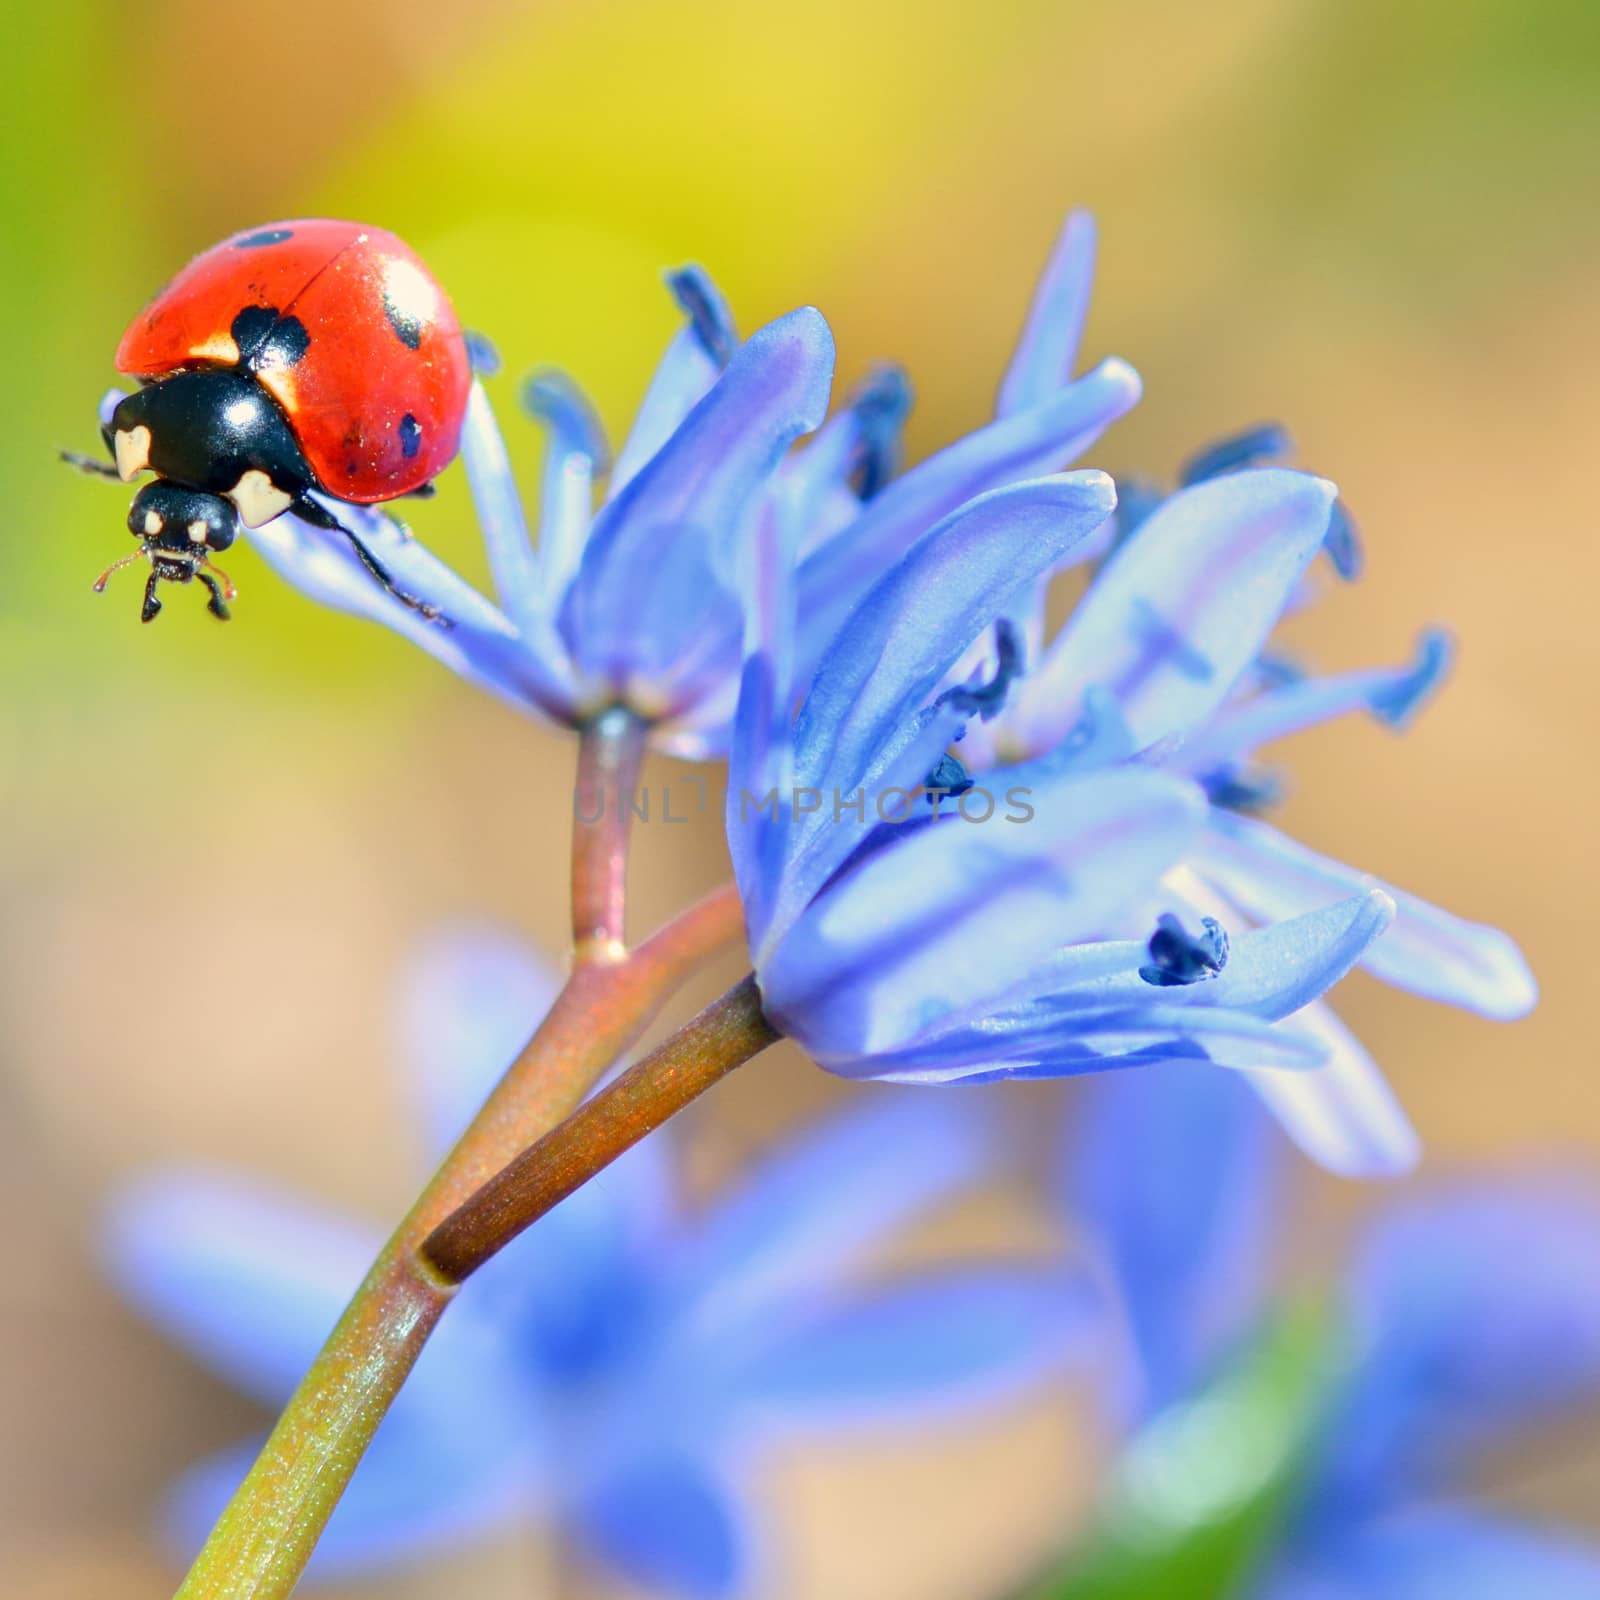 ladybug on blue flower by mady70